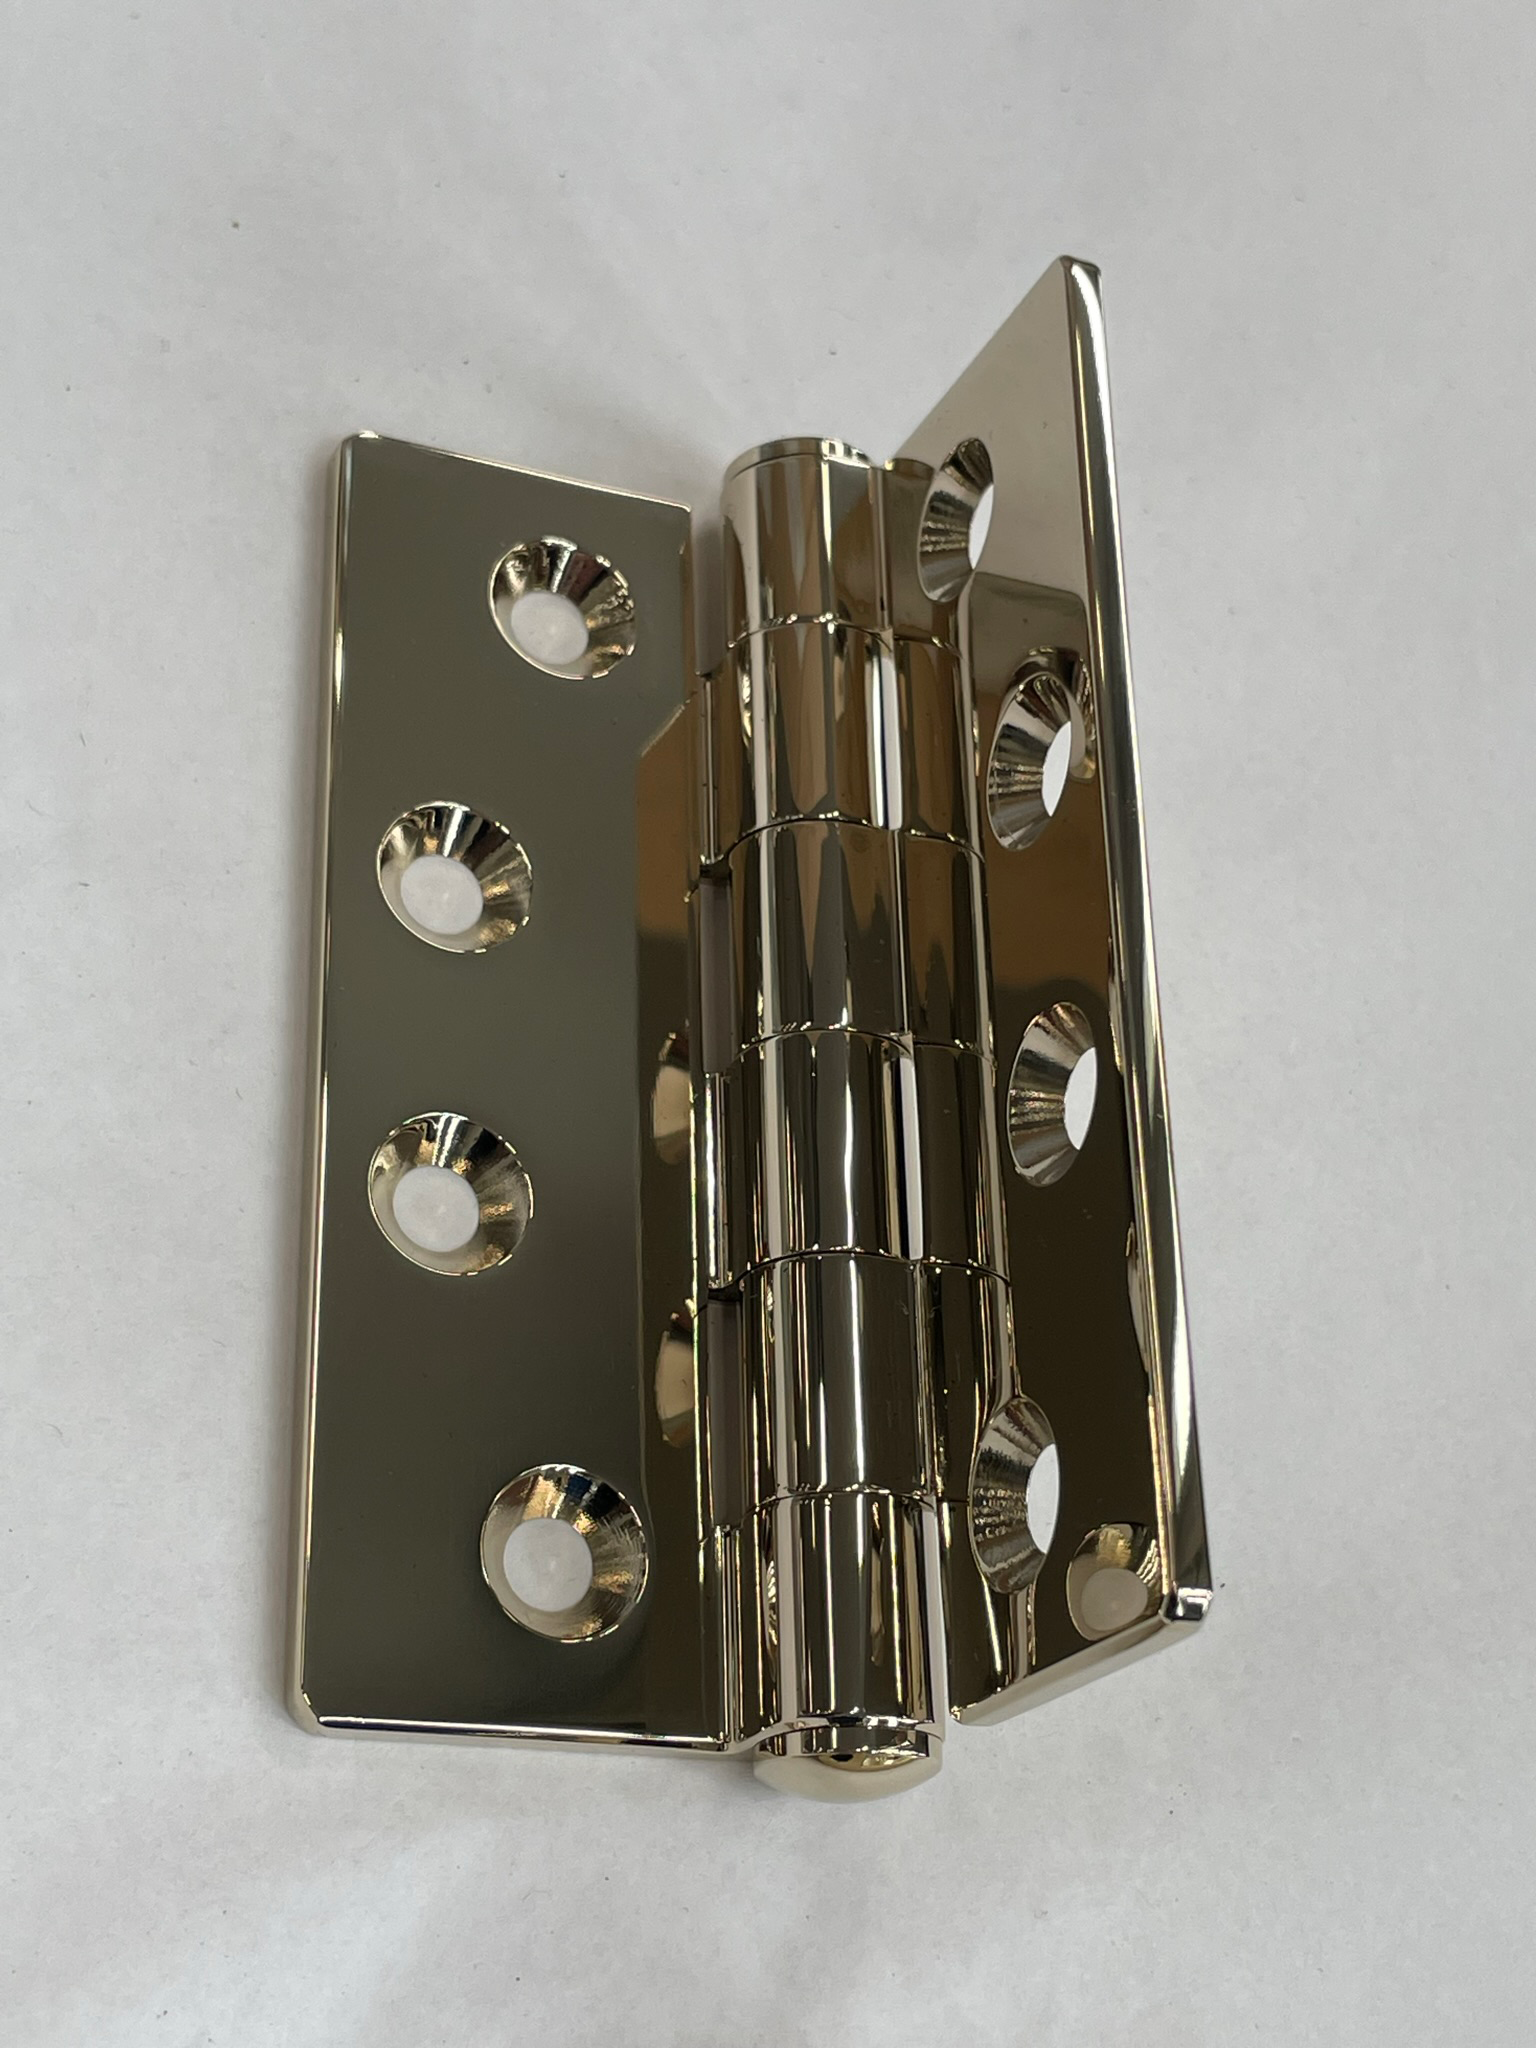 Brass hinge manually high-gloss polished